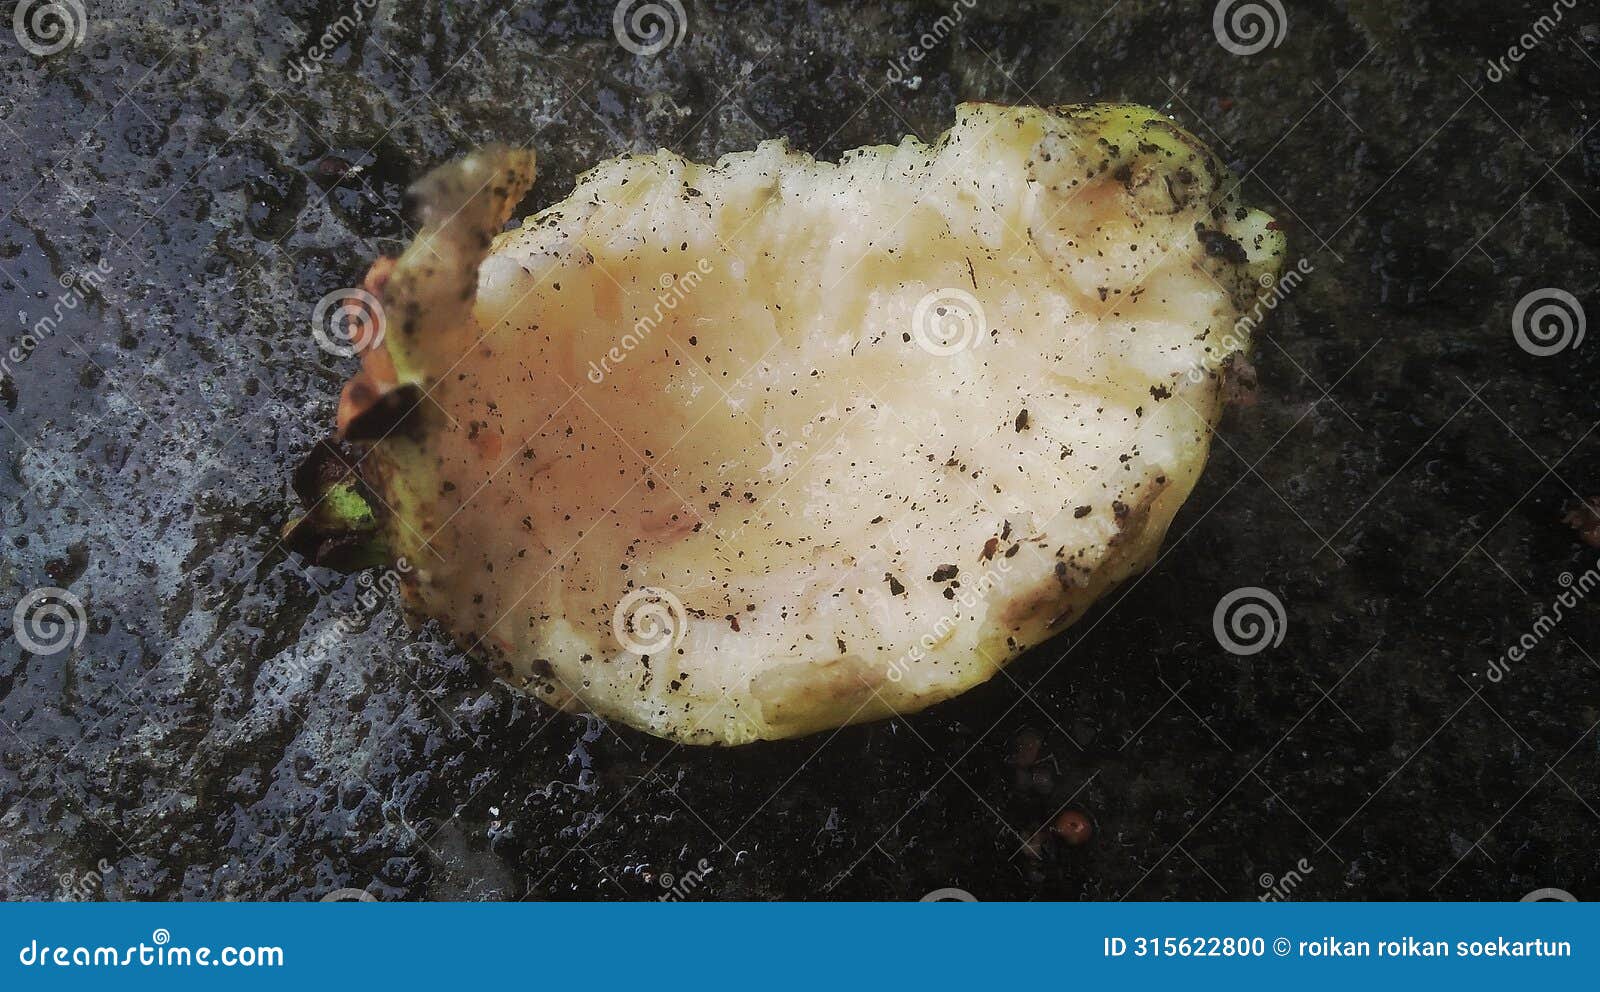 close up image of guava fruit or buah jambu